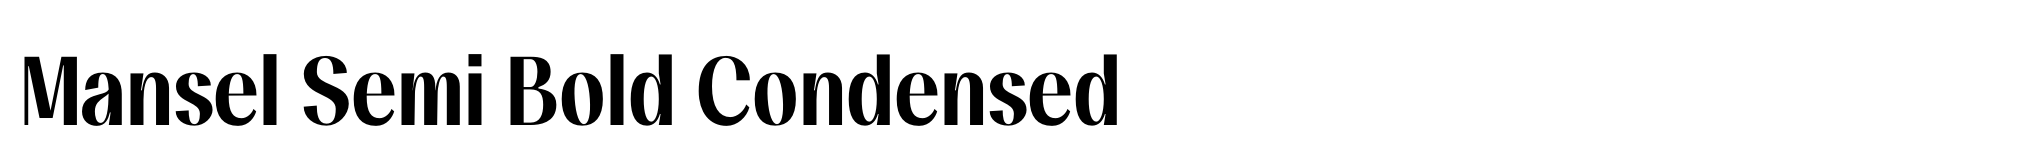 Mansel Semi Bold Condensed image